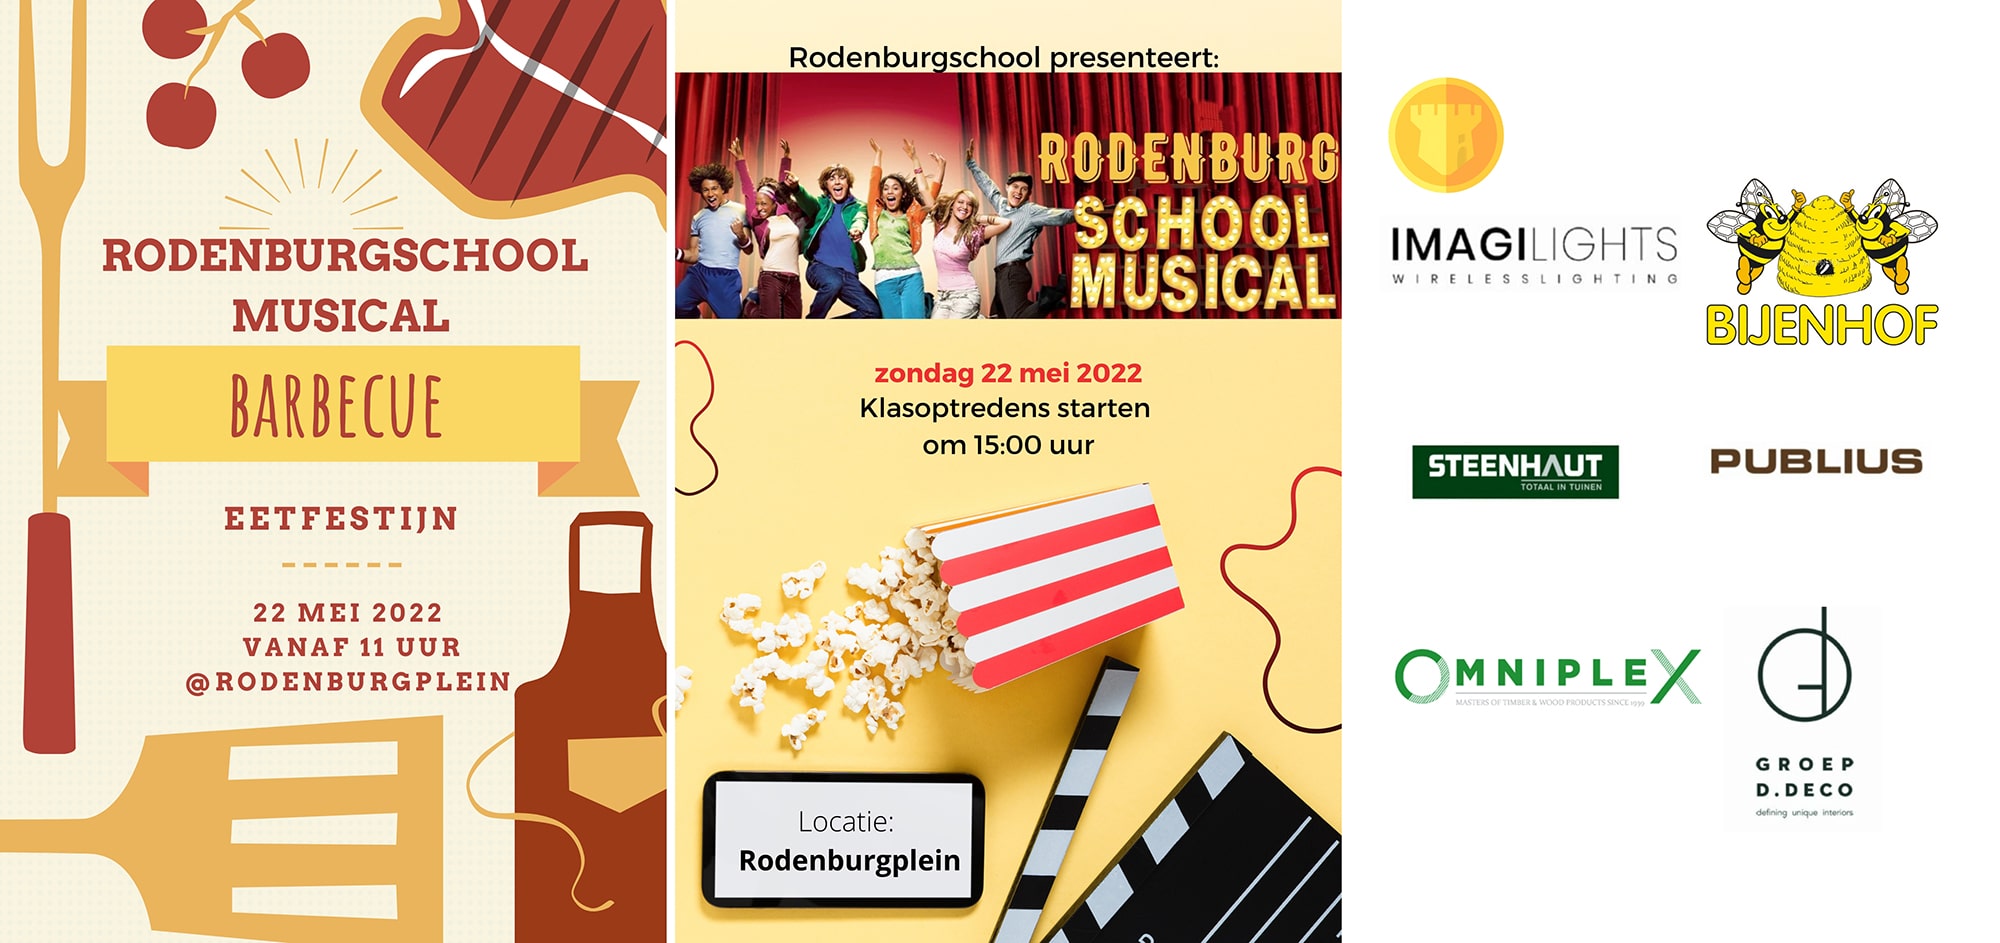 Rodenburg school musical